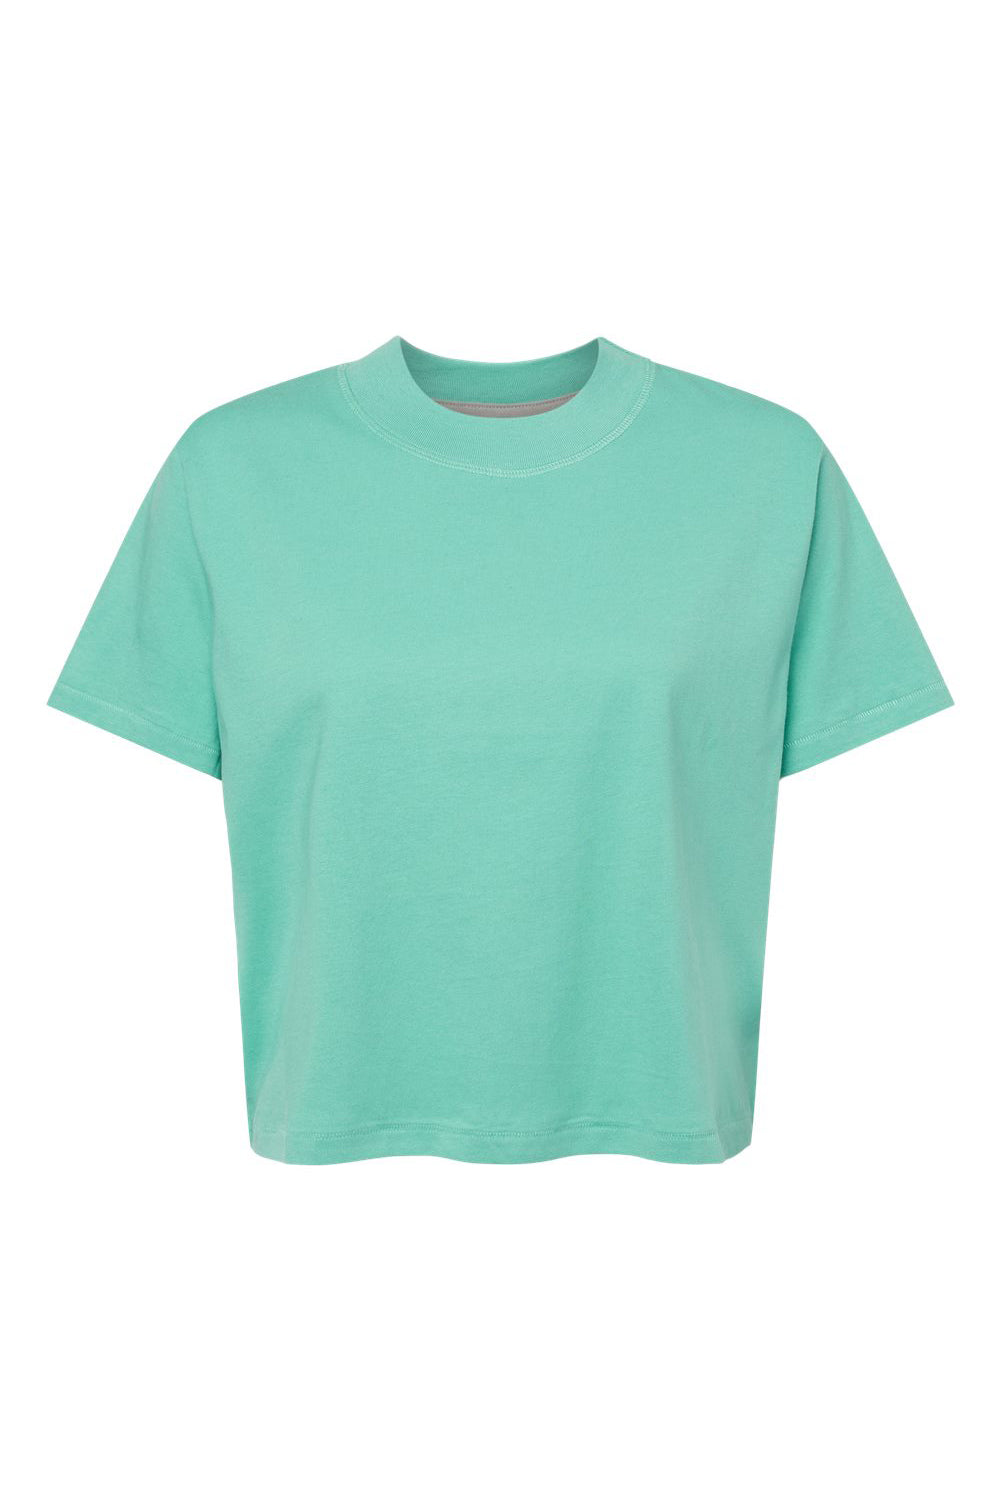 LAT 3518 Womens Boxy Short Sleeve Crewneck T-Shirt Saltwater Blue Flat Front